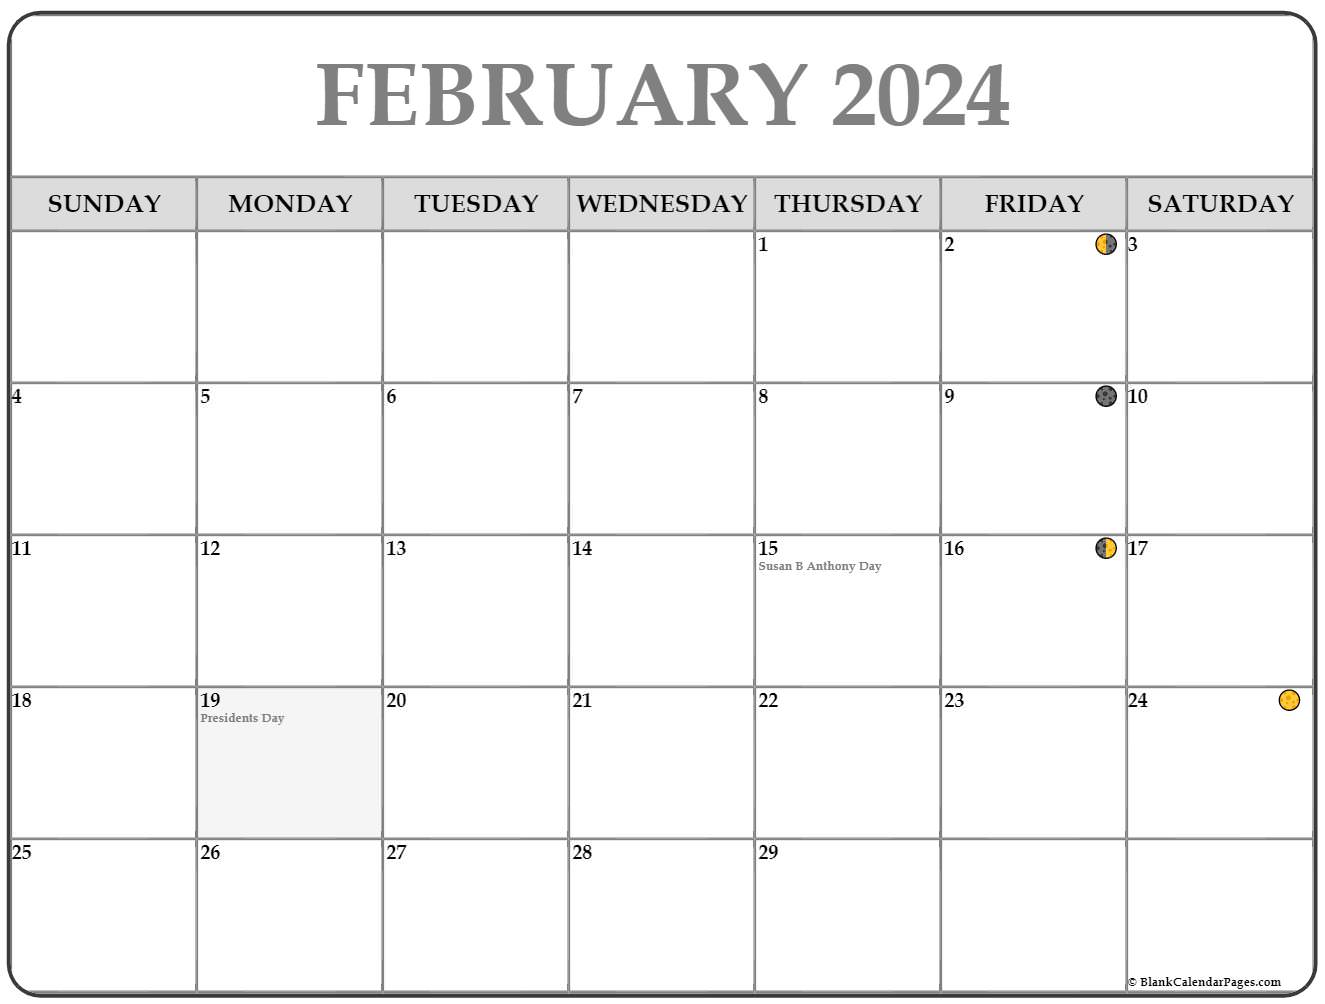 Lunar Calendar January 2022 February 2022 Lunar Calendar | Moon Phase Calendar